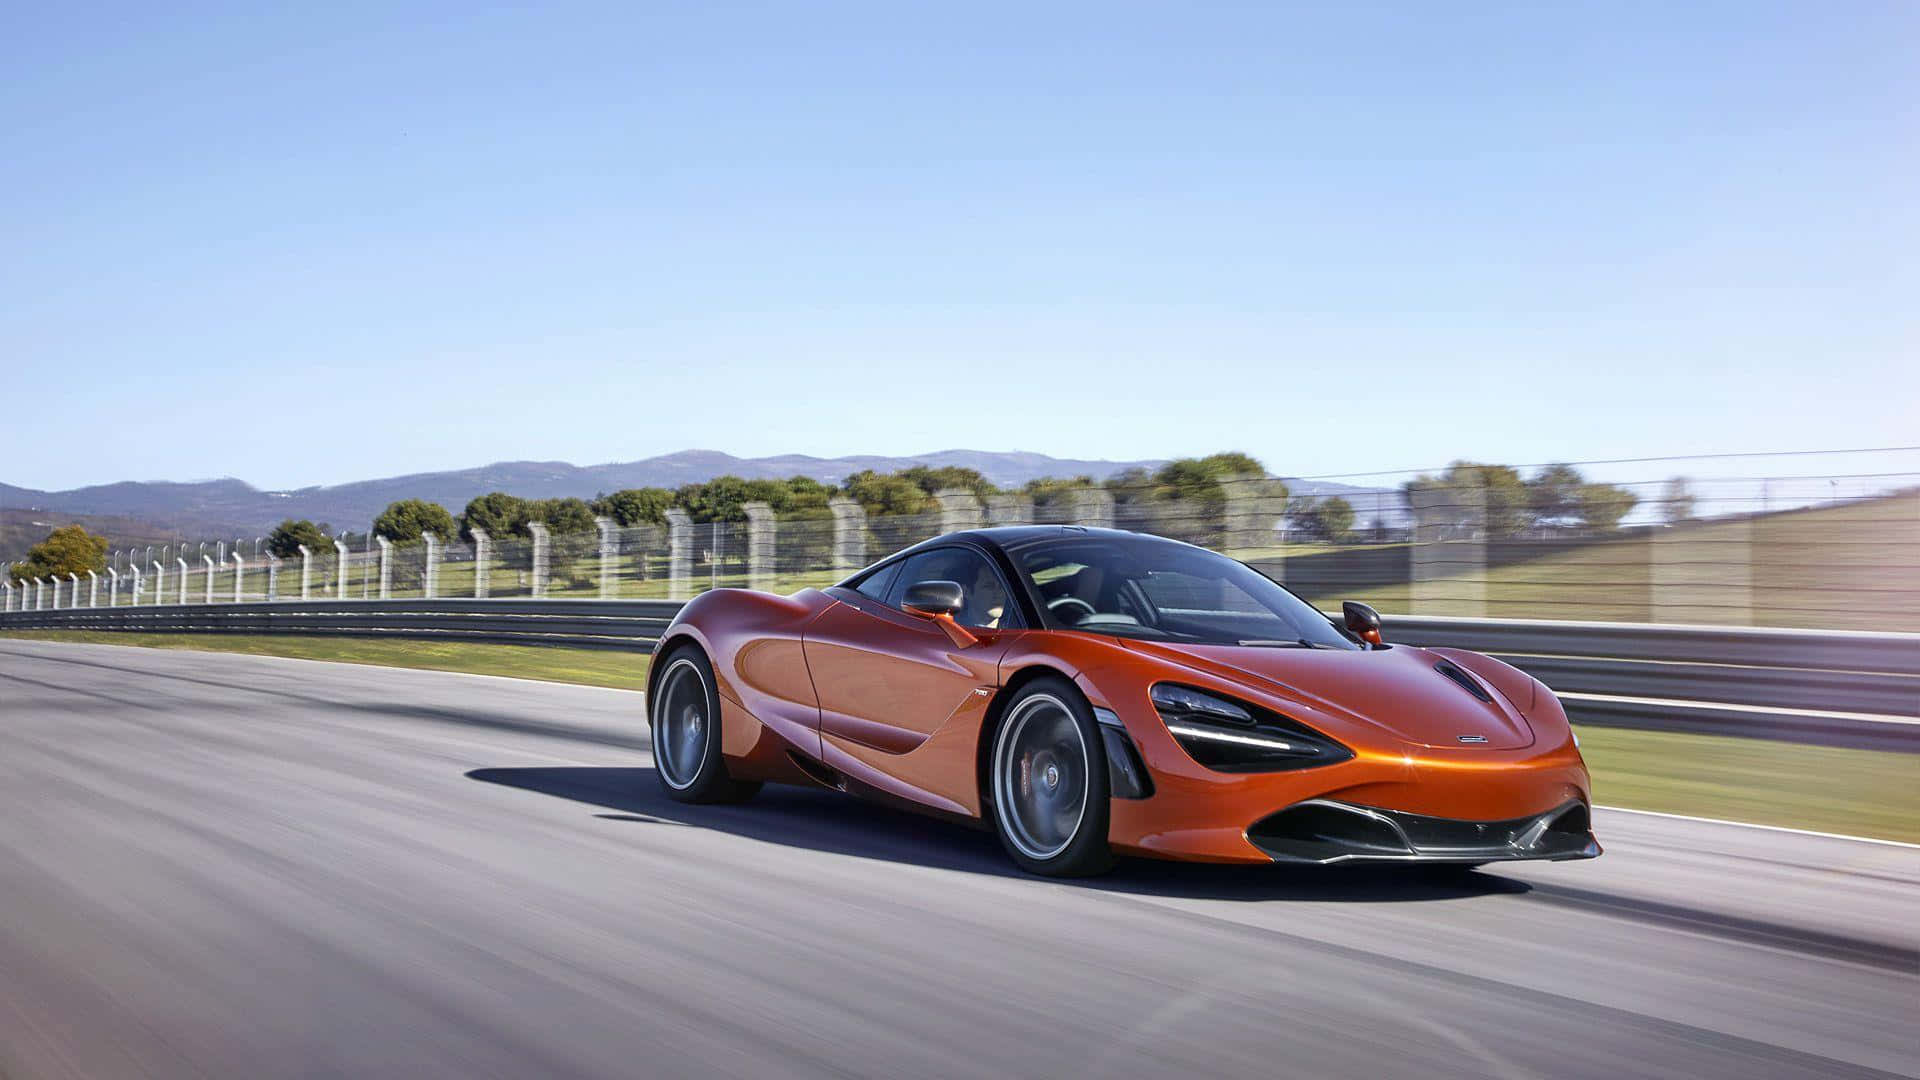 The Dynamic McLaren 720s